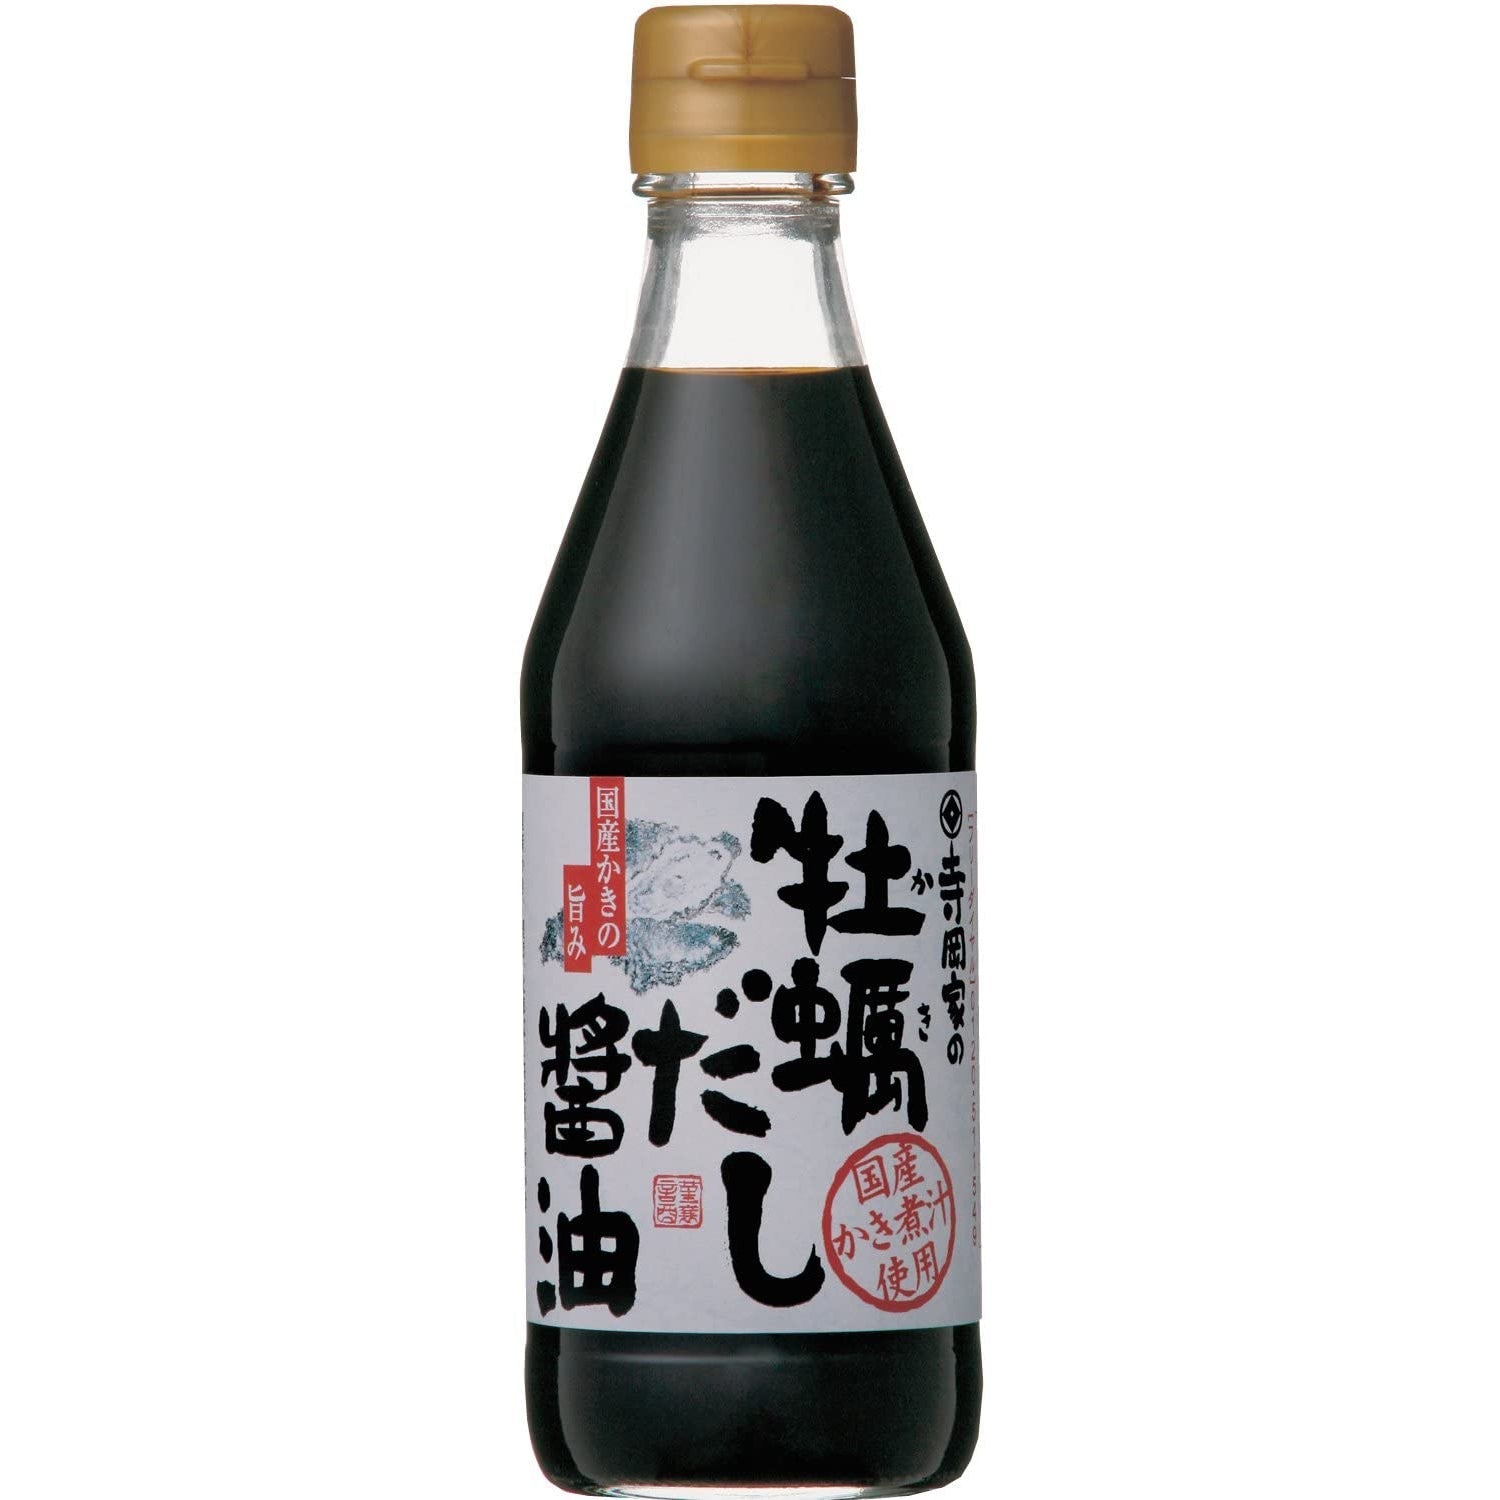 Teraoka Dashi Shoyu Japanese Oyster Soy Sauce 300ml